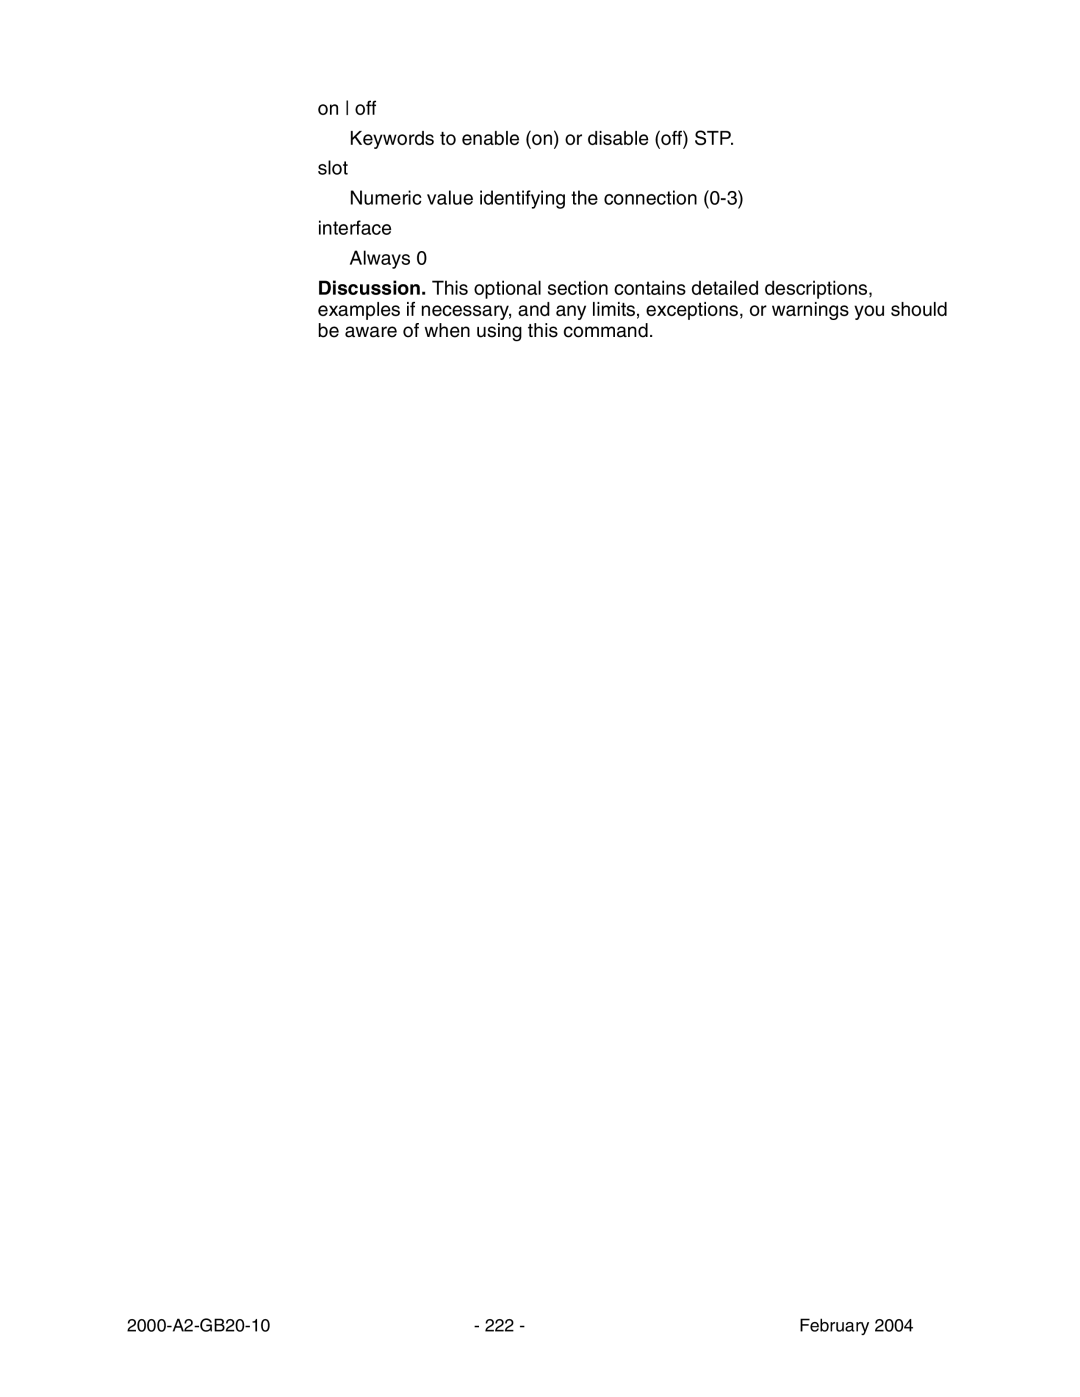 Paradyne JetFusion Integrated Access Device manual 2000-A2-GB20-10 222 February 